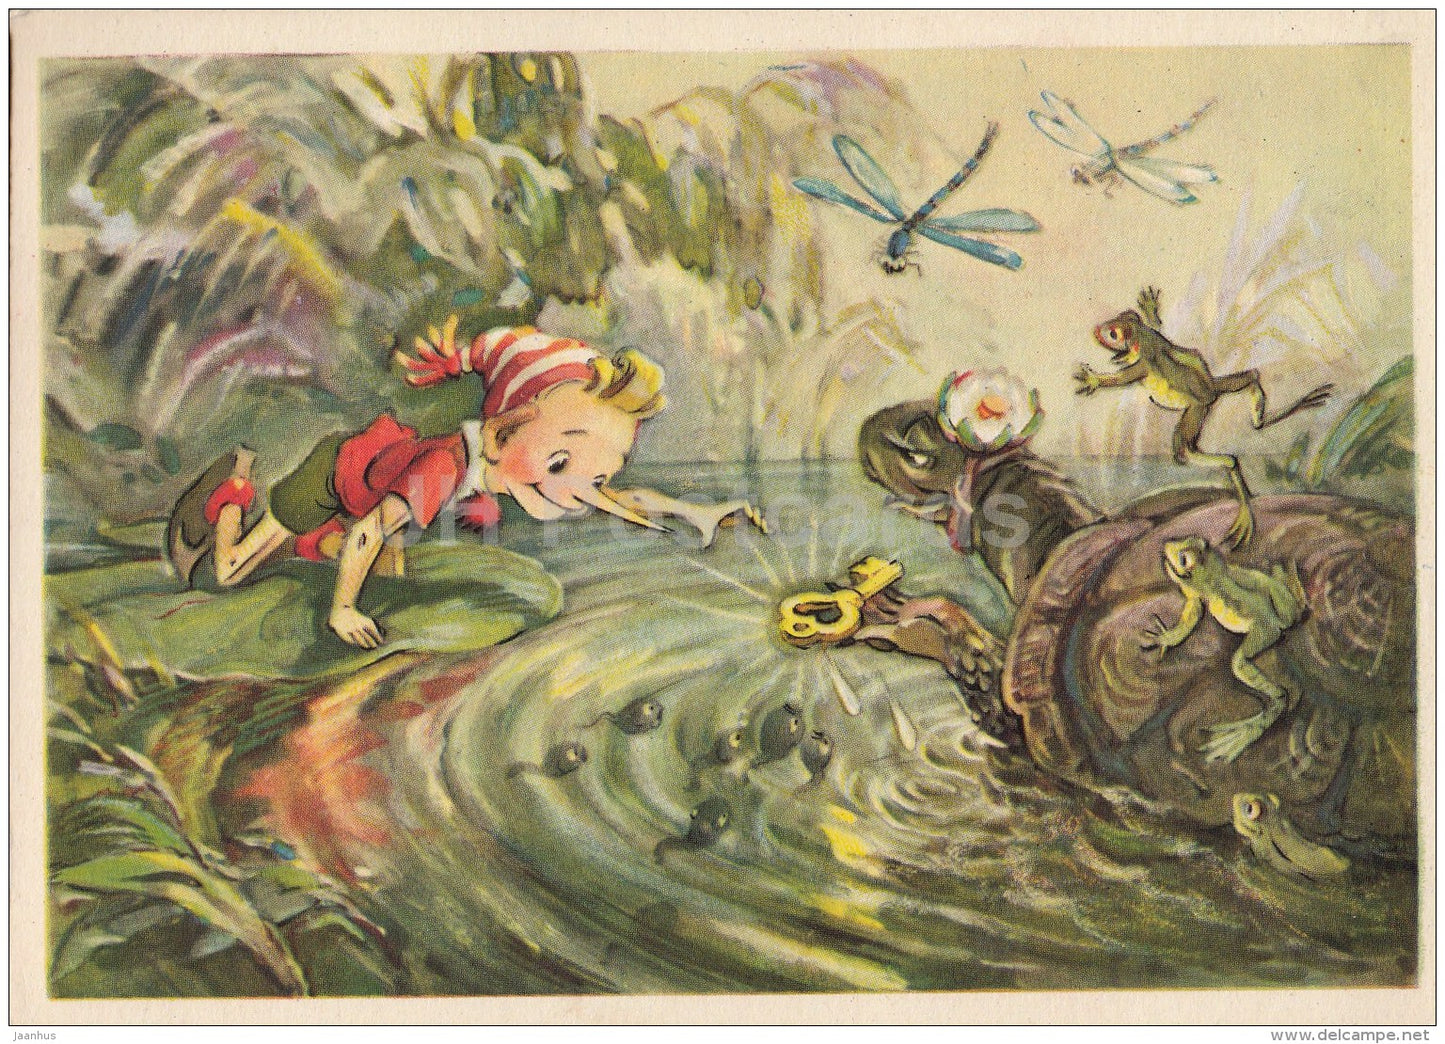 illustration by L. Vladimirsky - Buratino - Pinocchio - frog - golden key - Tortilla - 1955 - Russia USSR - unused - JH Postcards